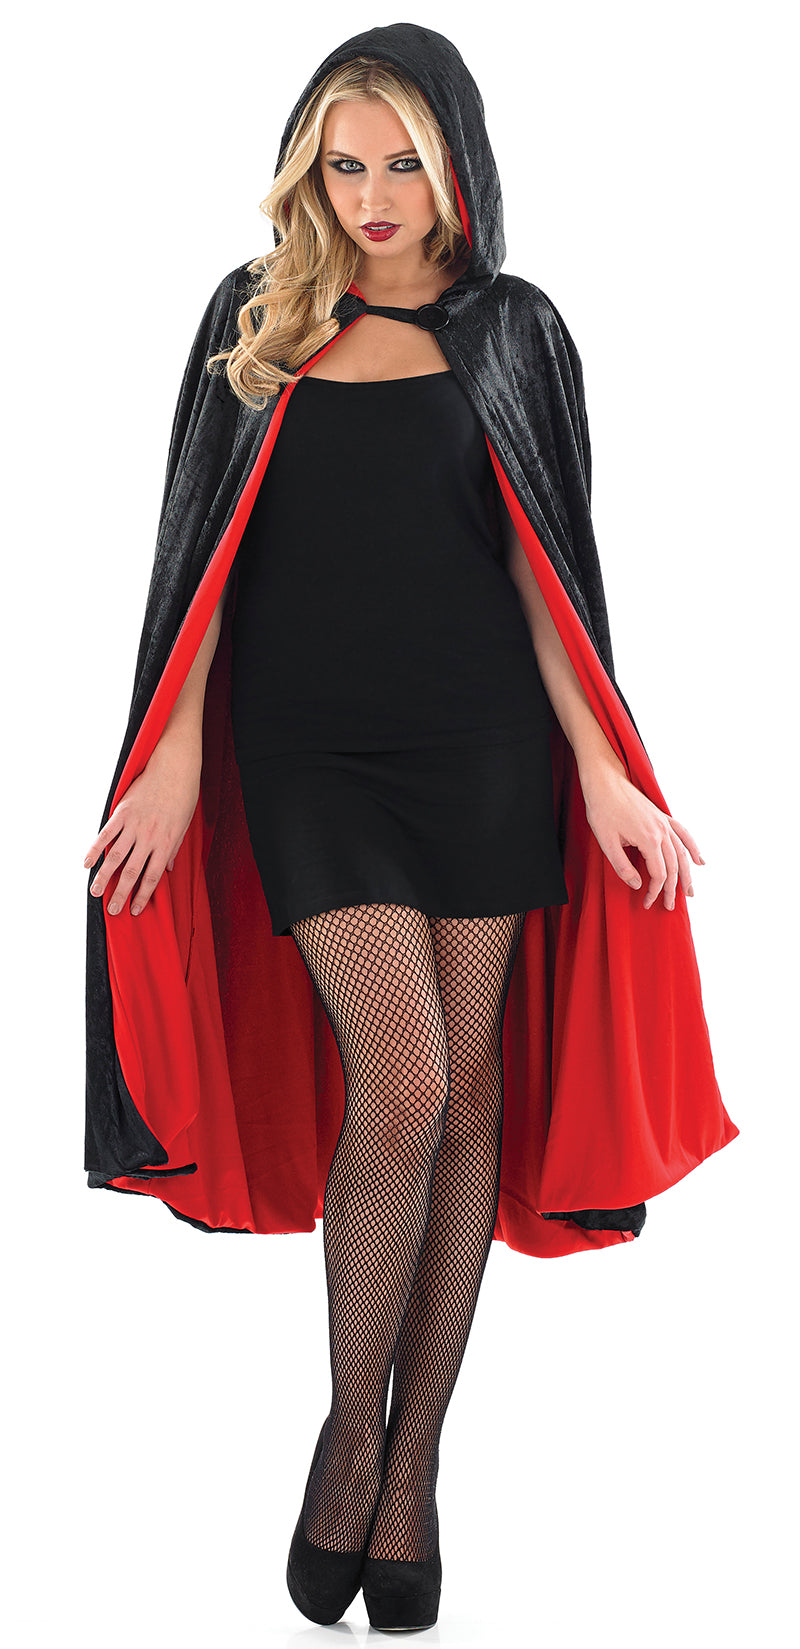 Short Black and Red Cape Costume Versatile Accessory